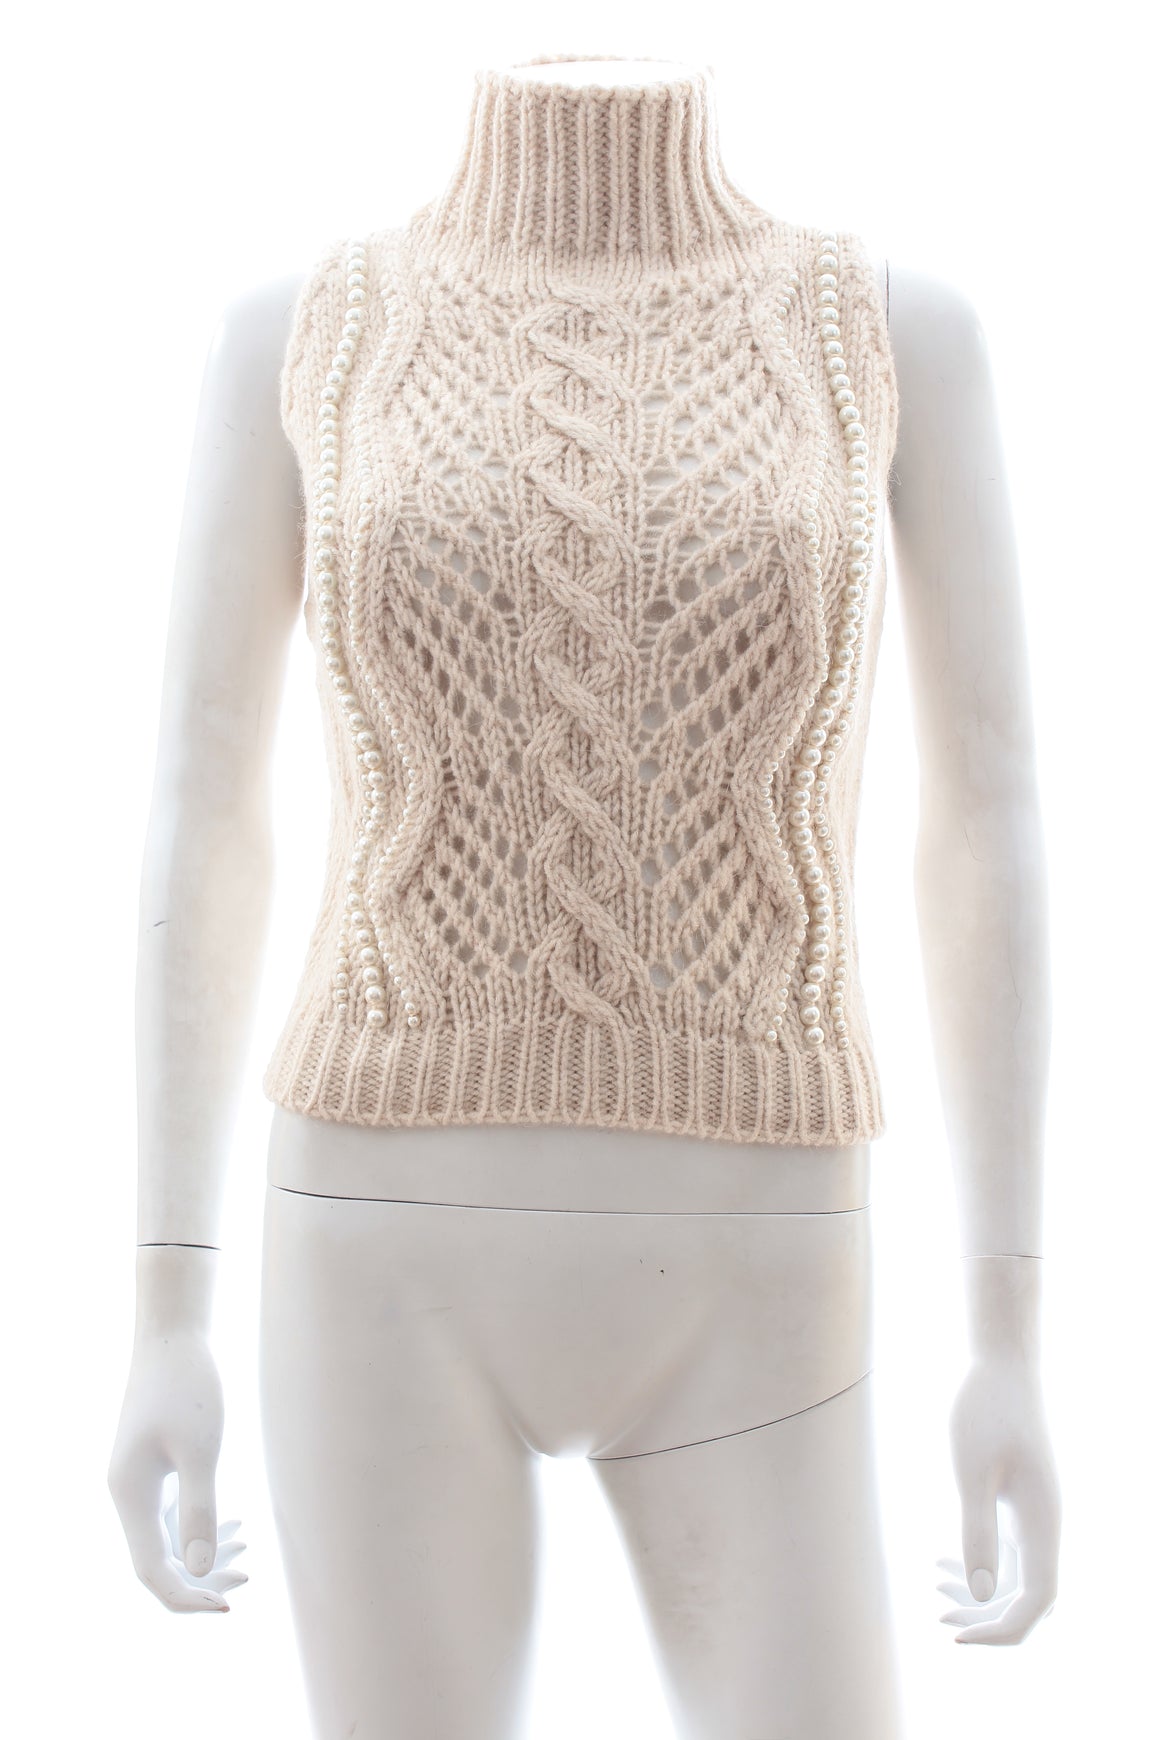 Ermanno Scervino Pearl-Embellished Alpaca-Blend Sleeveless Sweater